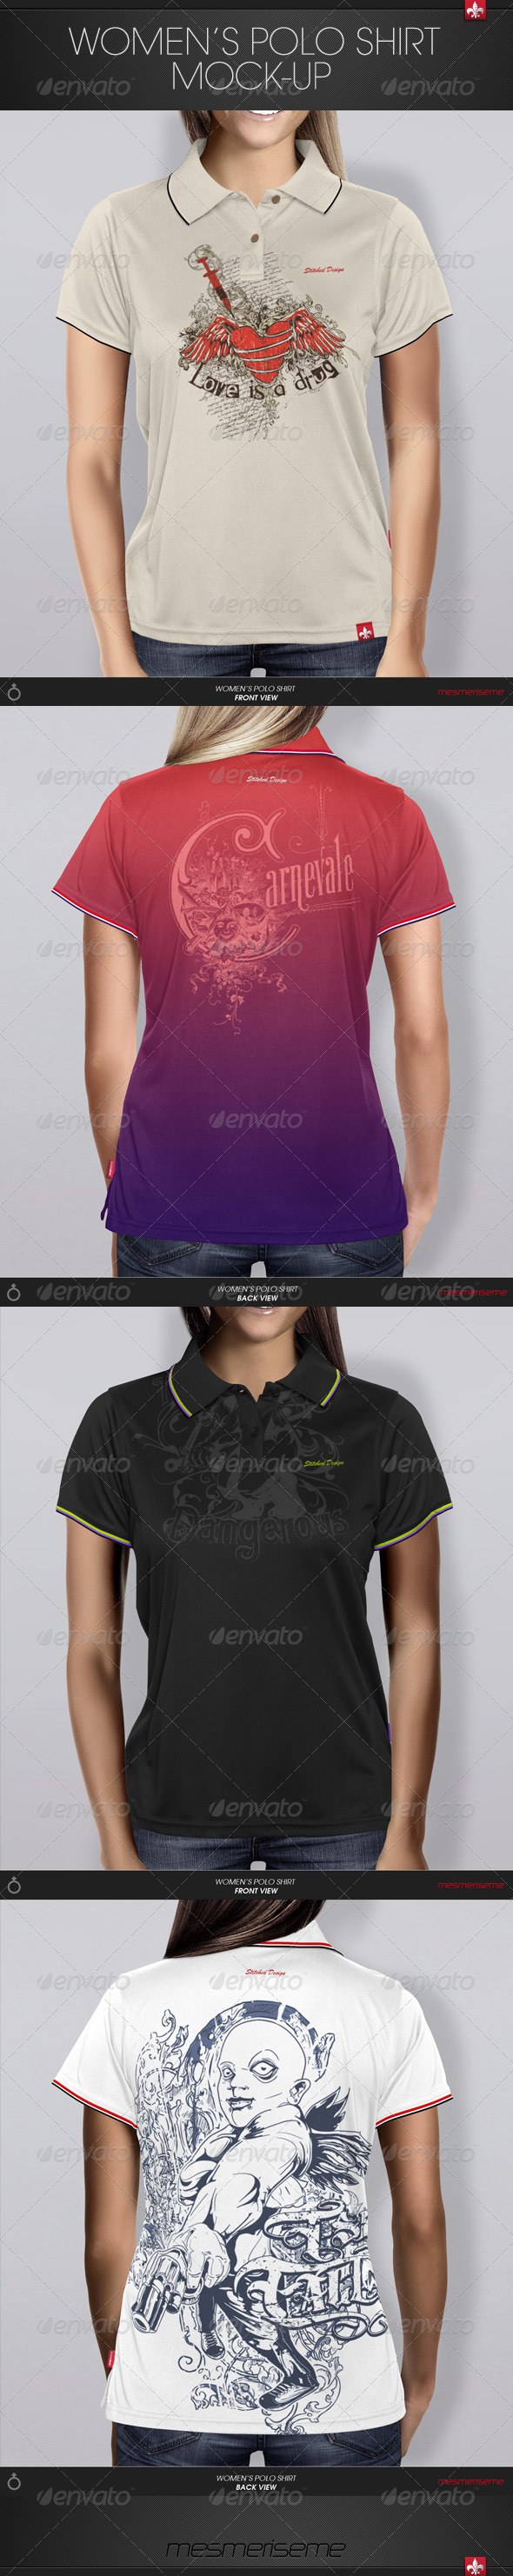 Download Polo Shirt Template Photoshop » Dondrup.com